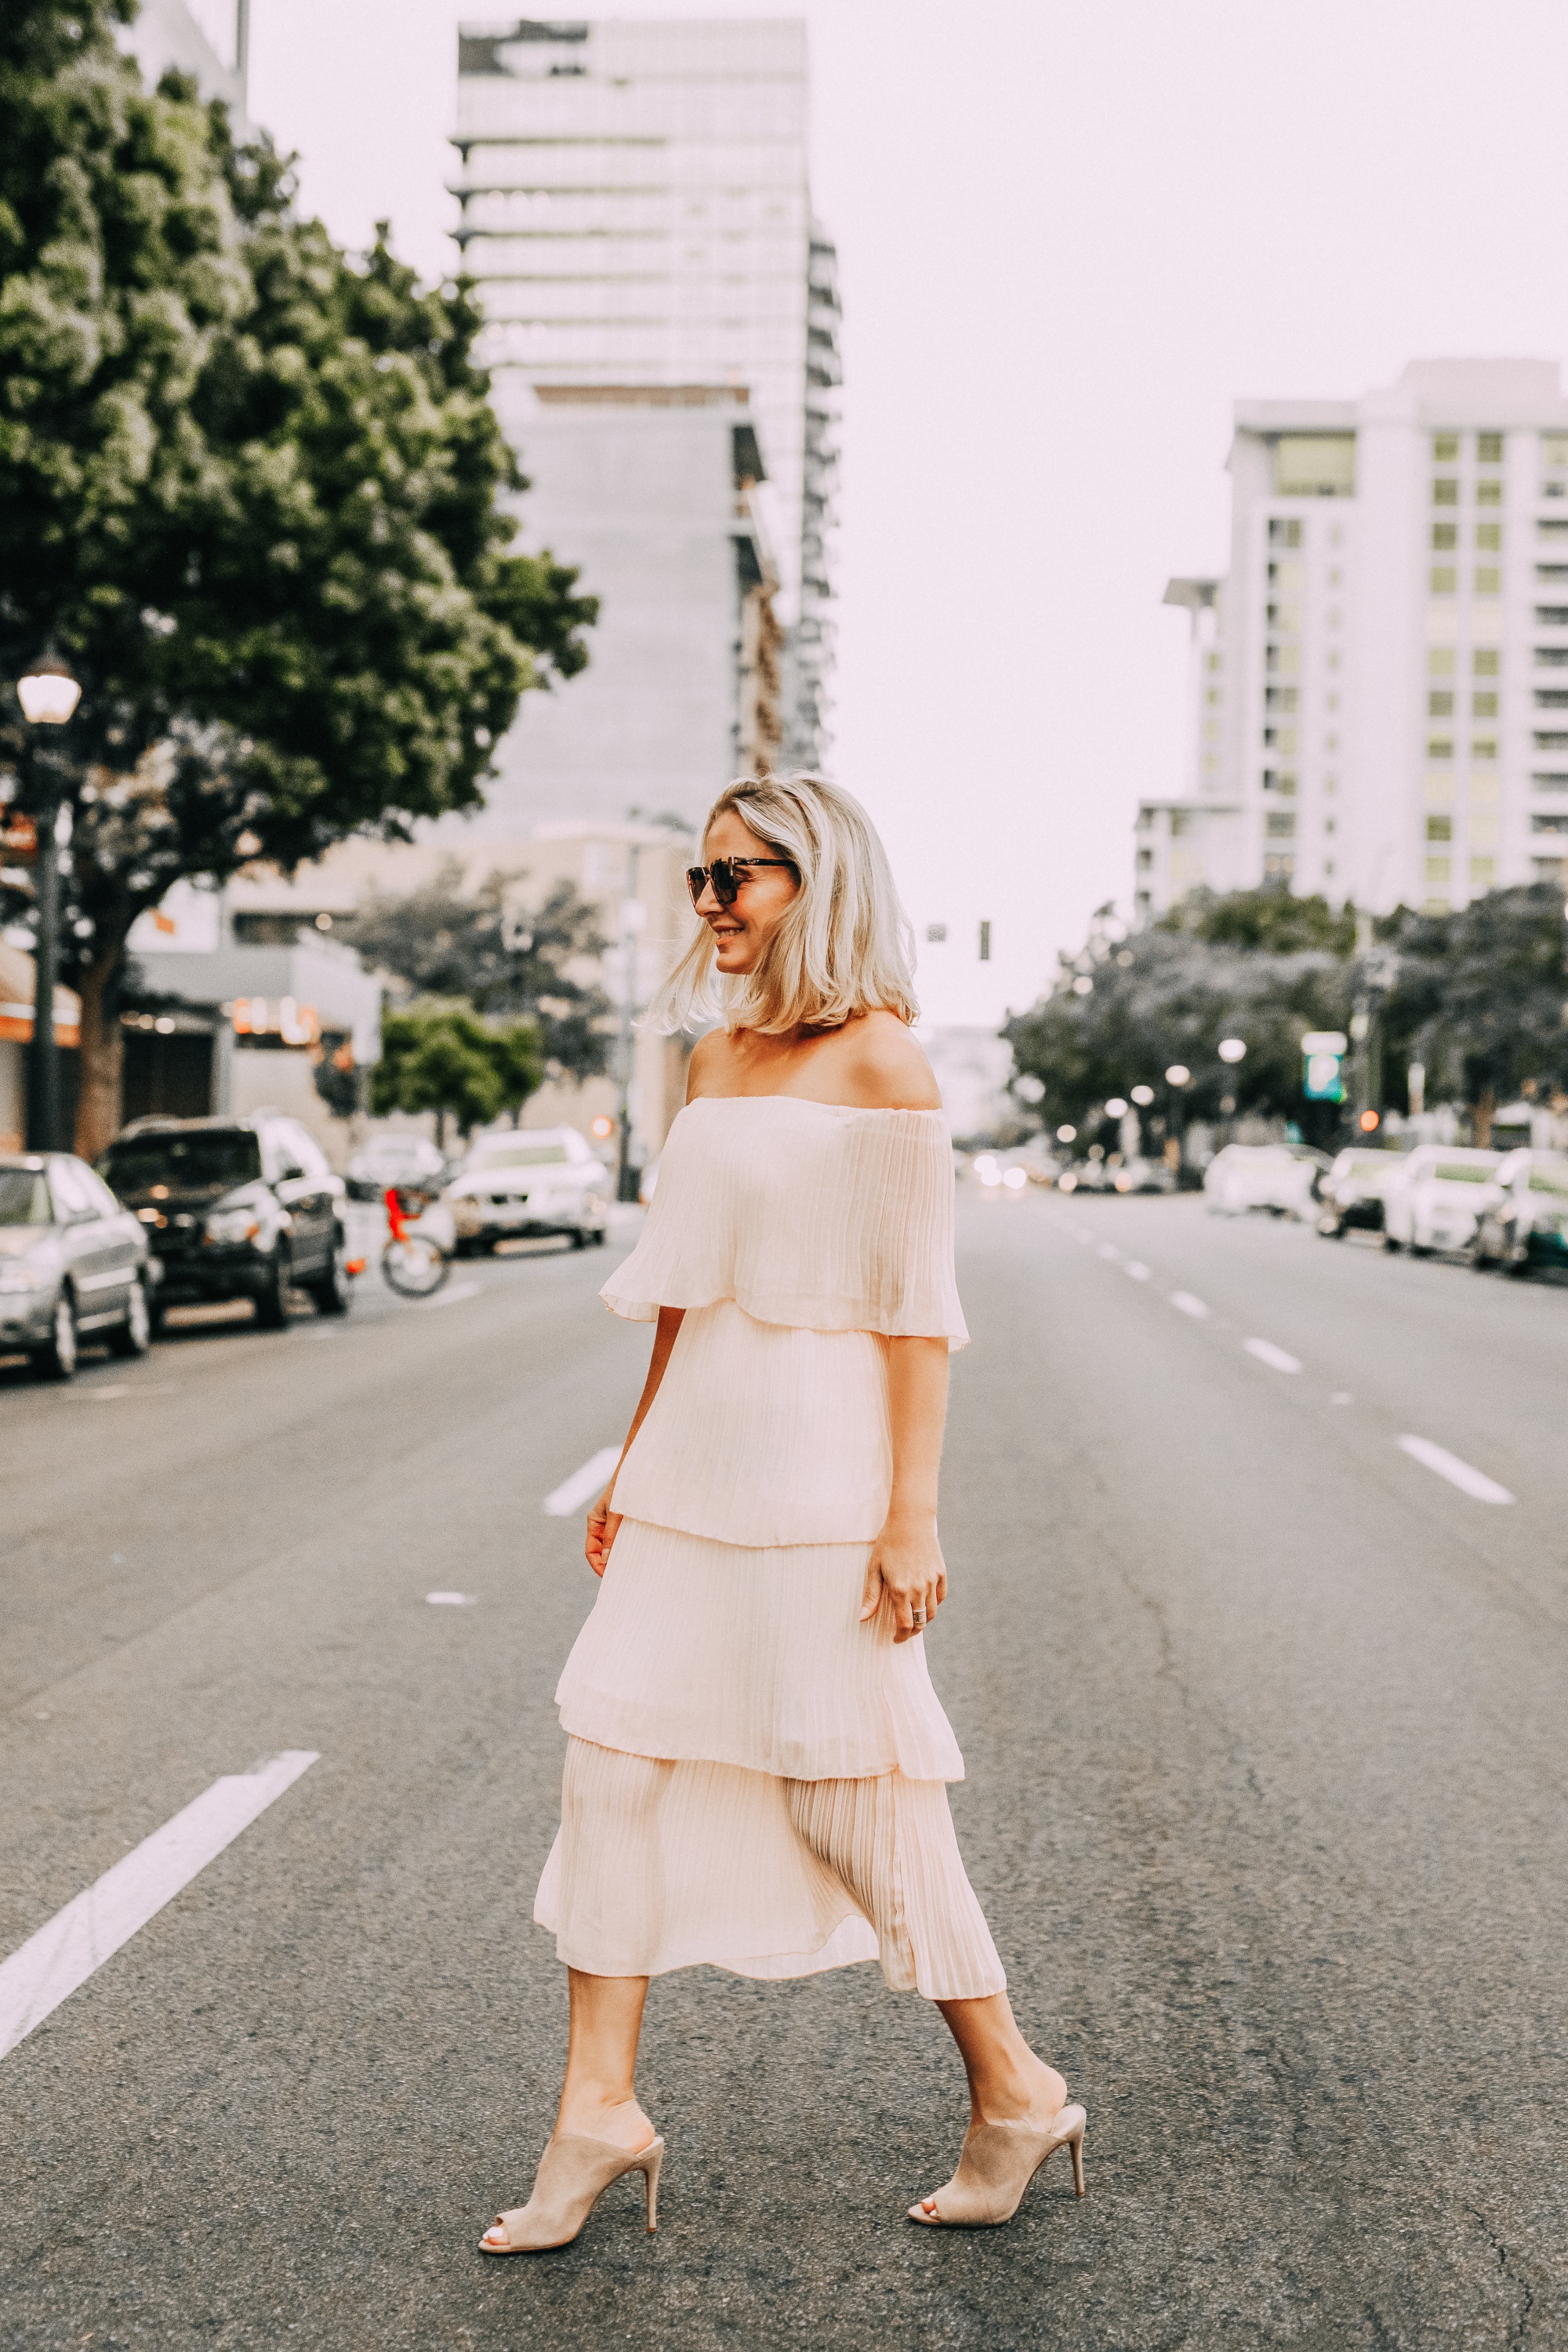 Tiered Amazon Dress, Fashion blogger wearing trending ETCYY tiered ruffle pleat blush dress